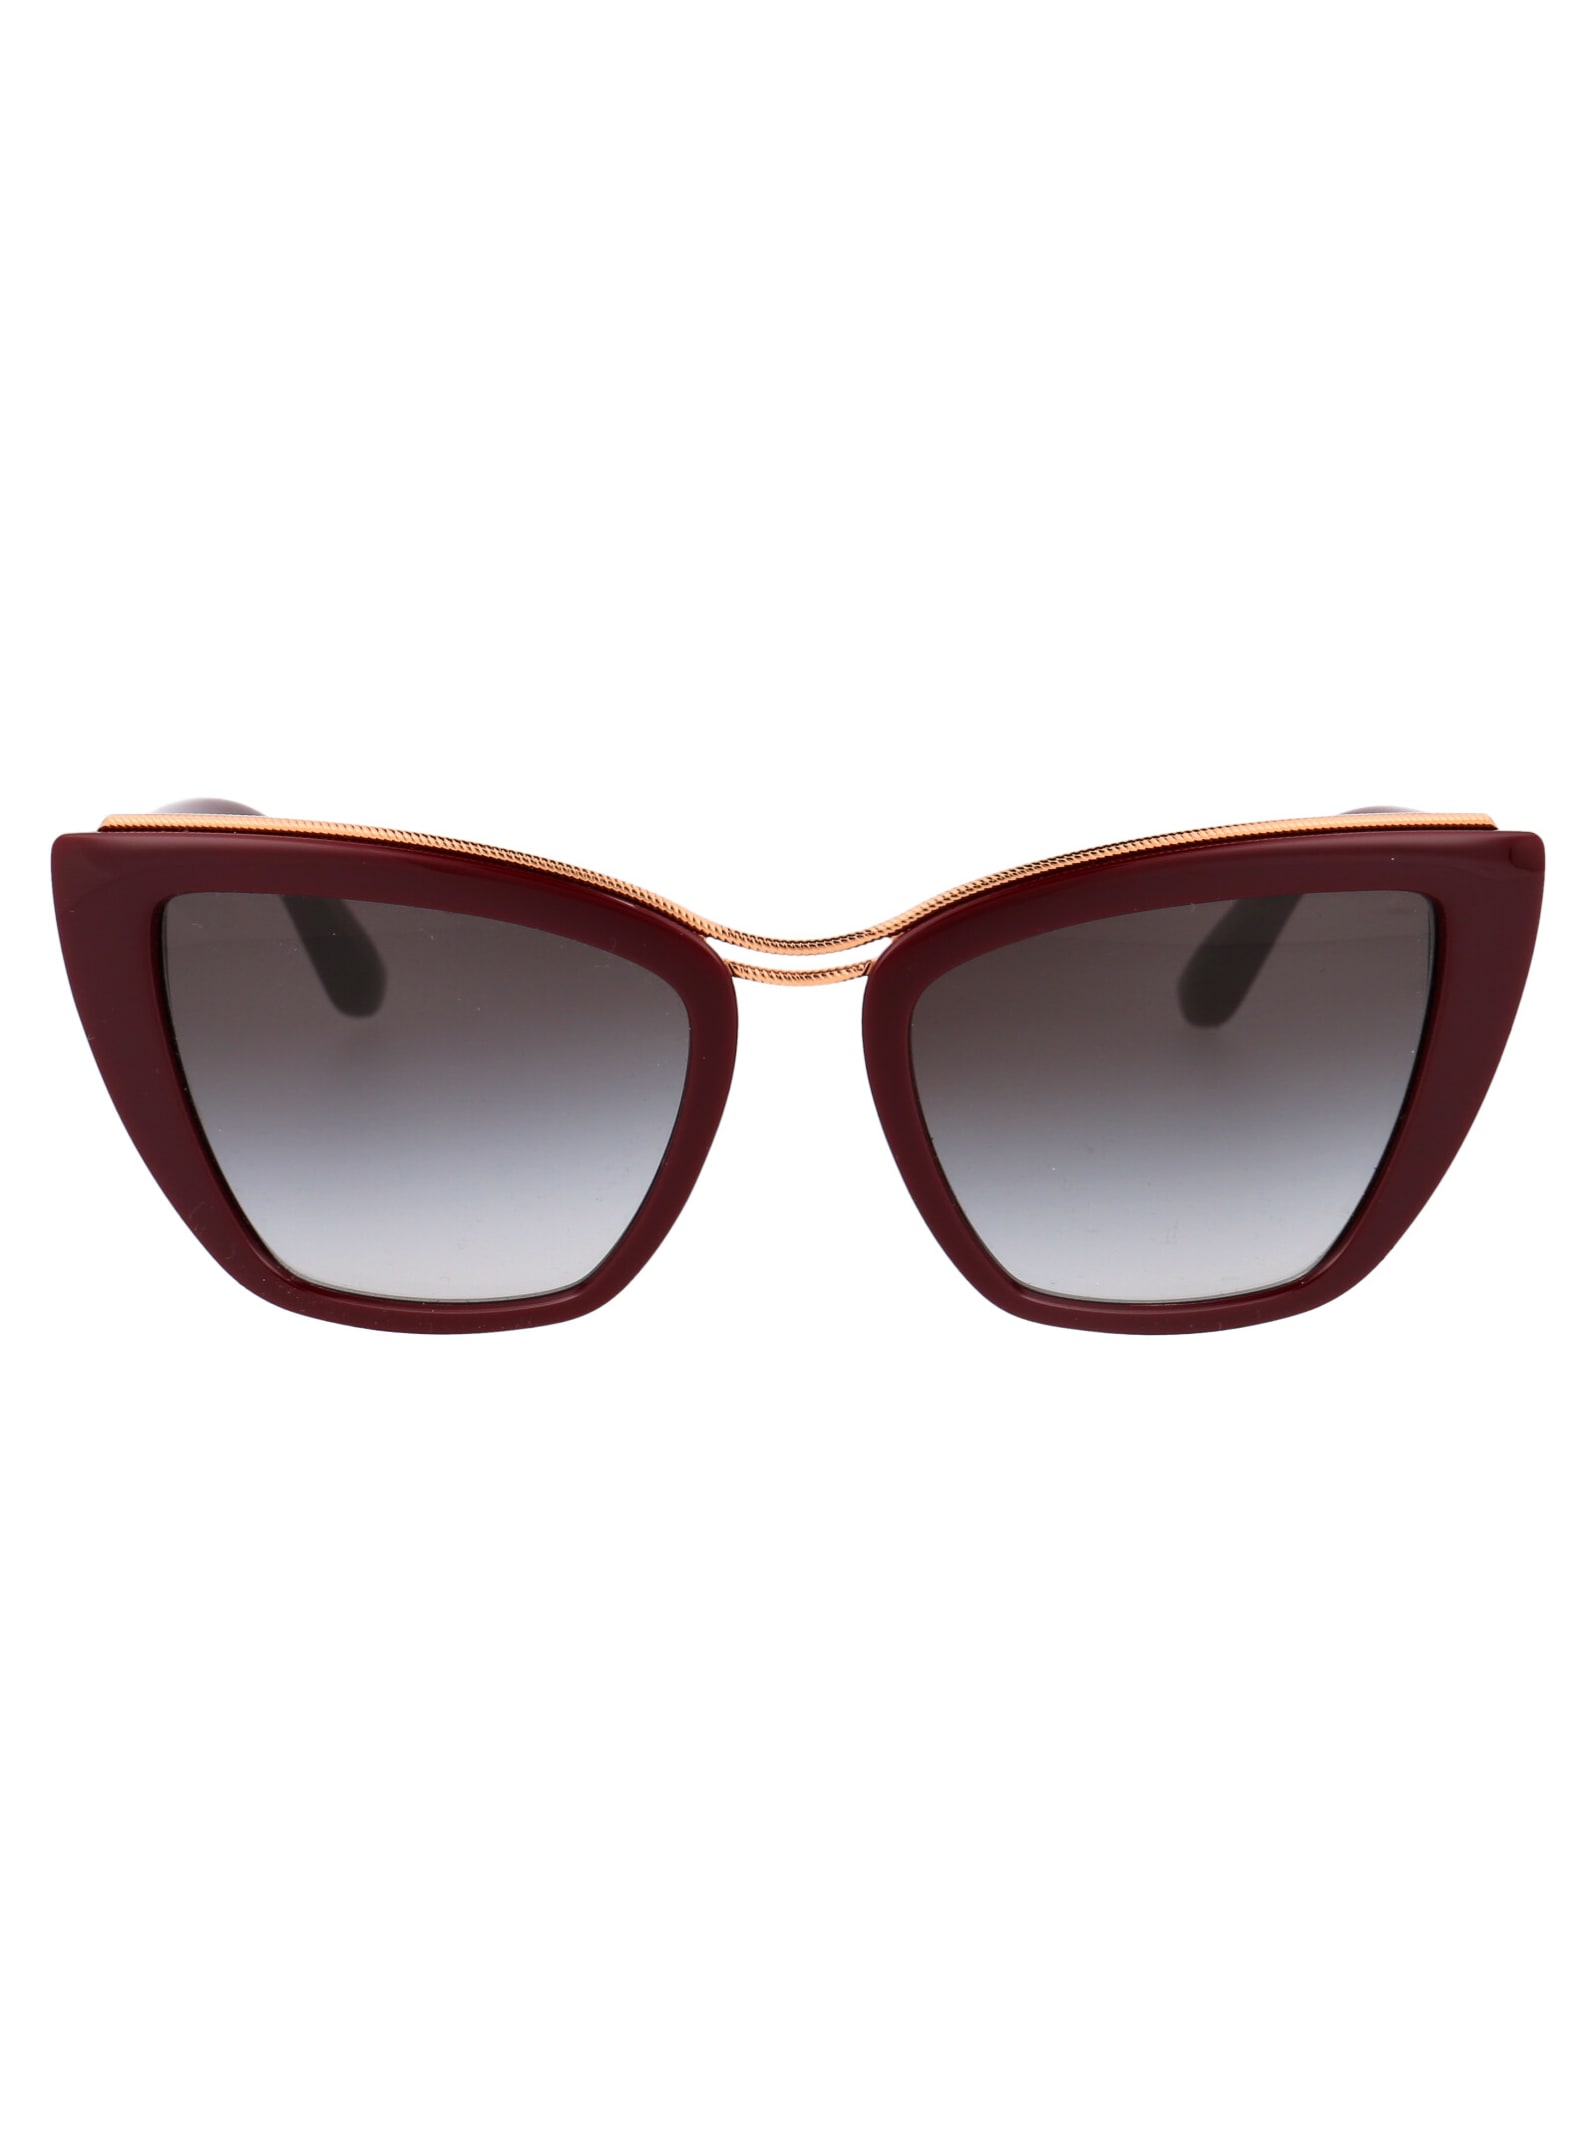 Dolce & Gabbana Eyewear 0dg6144 Sunglasses